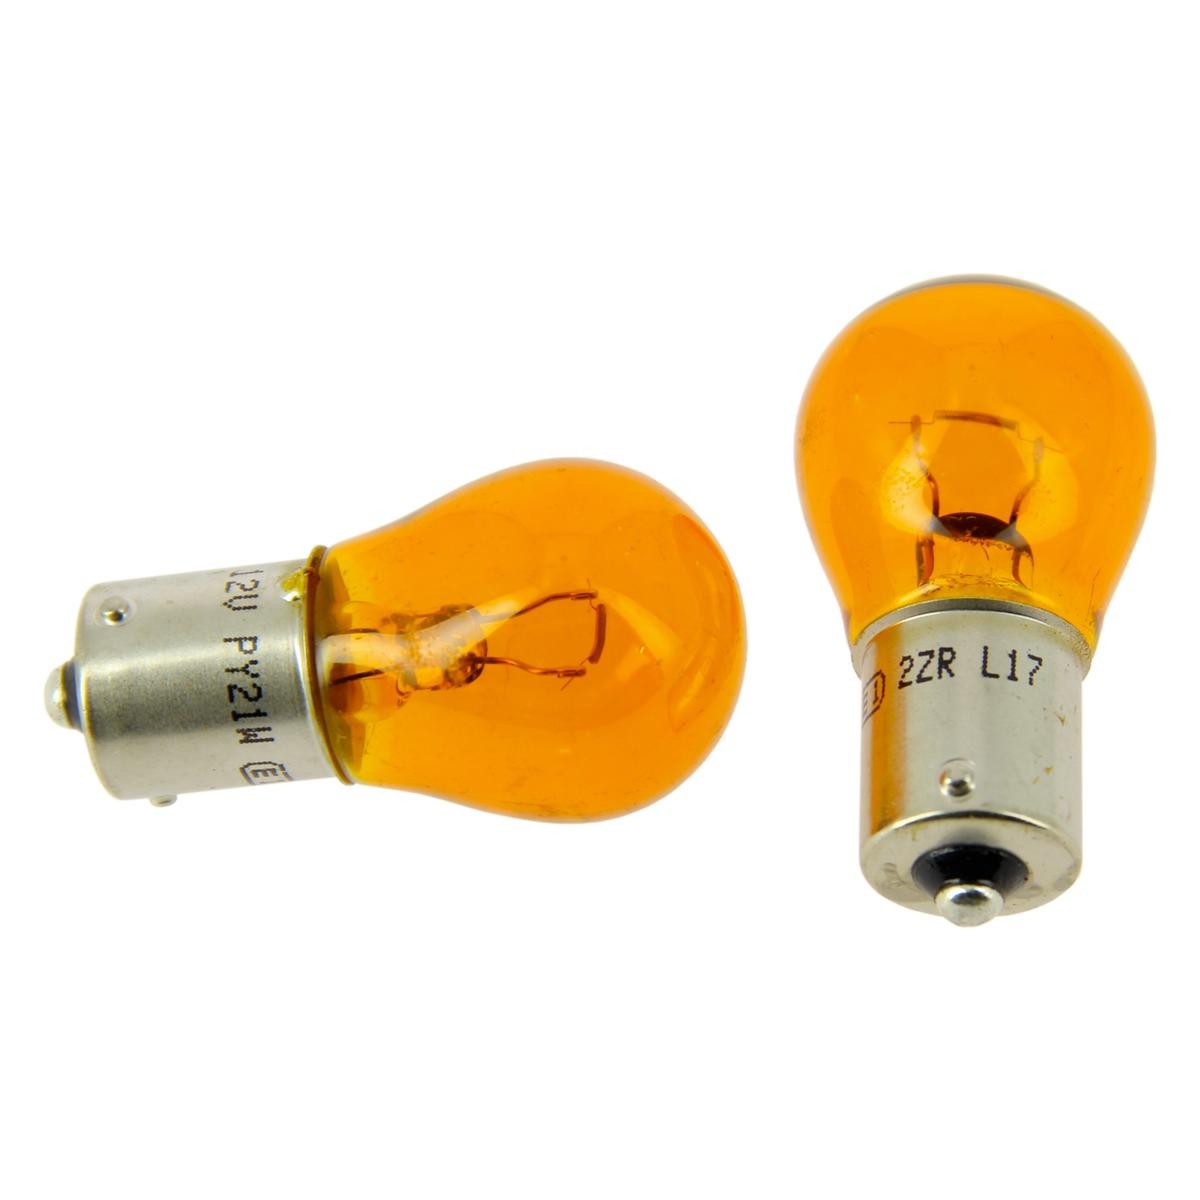 Ampoule Feu Clignotant Orange 12V 21W BAU15s